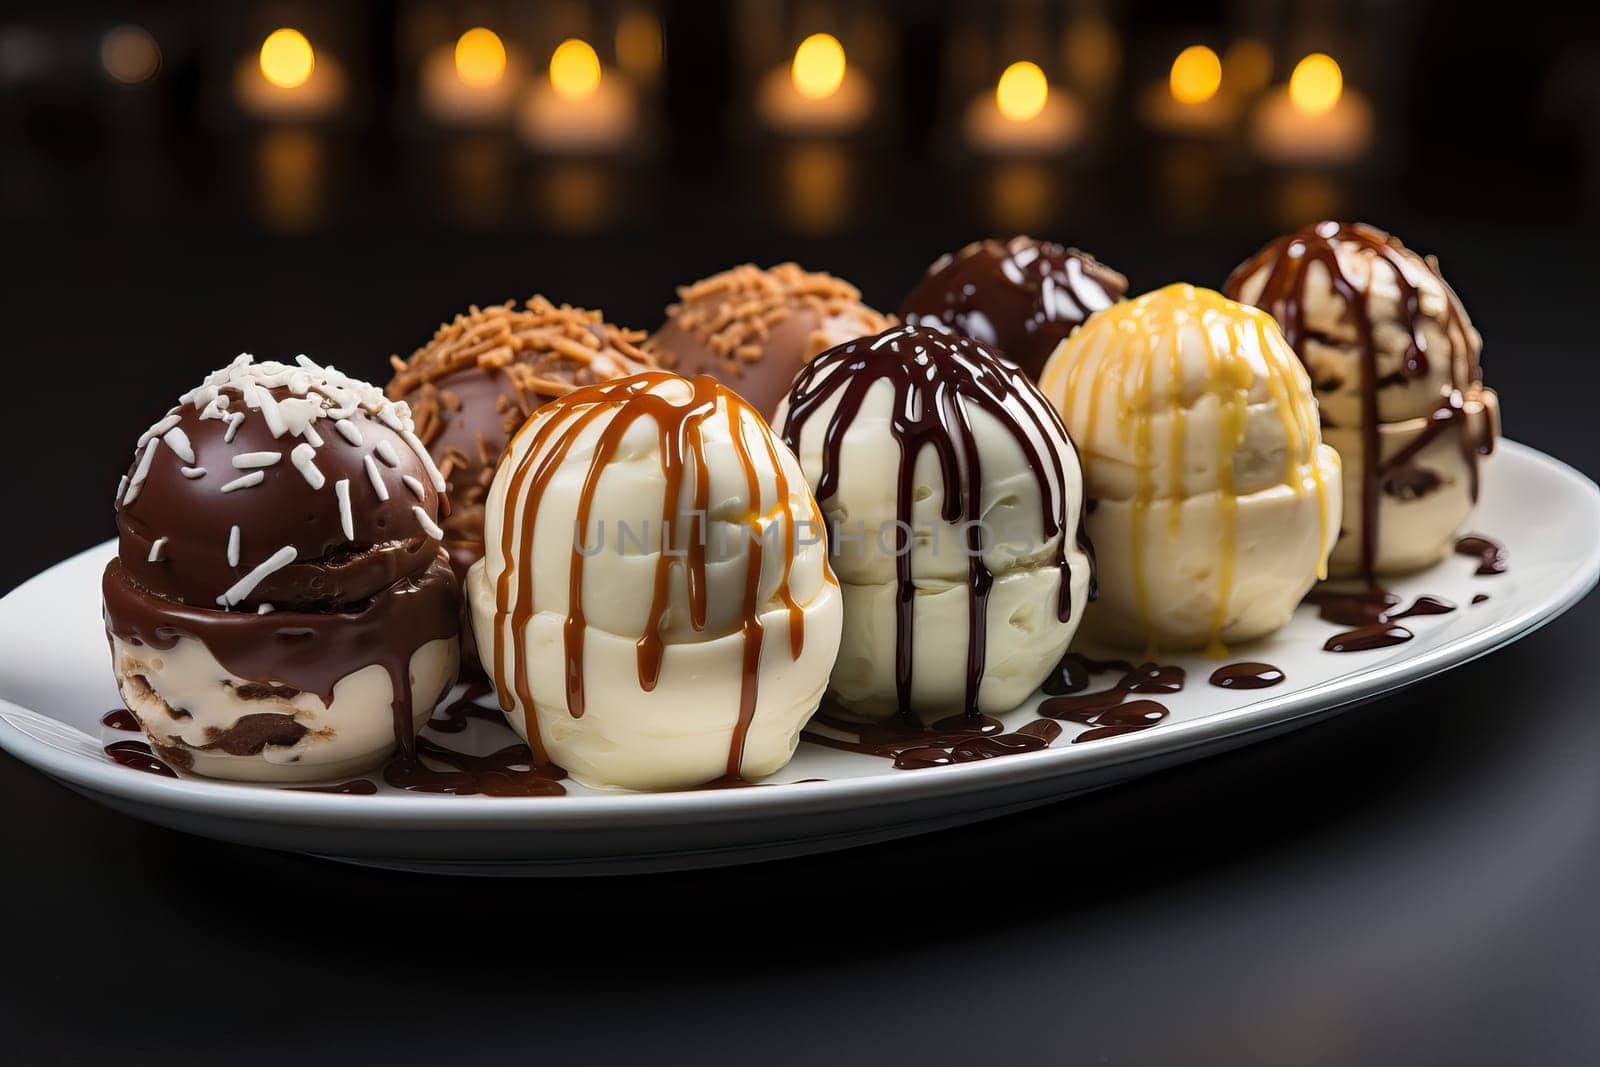 Chocolate and vanilla balls with chocolate on a plate close-up. by Niko_Cingaryuk